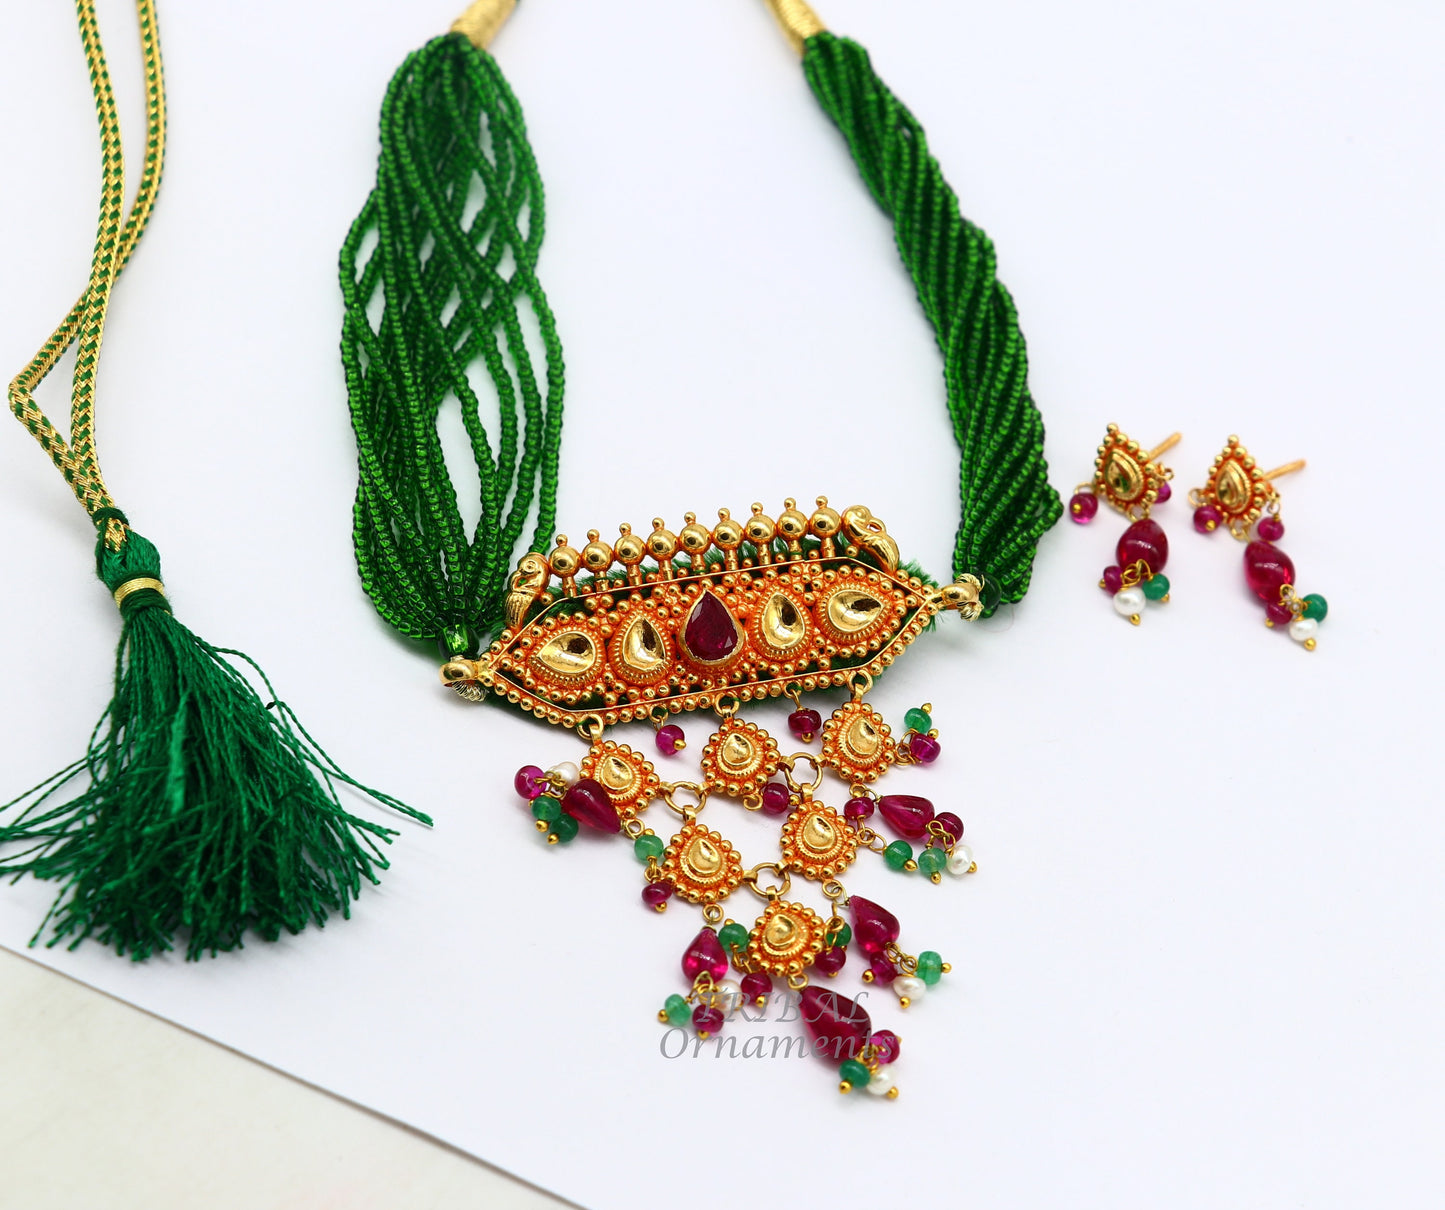 22 karat yellow gold Vintage traditional Rajputana Necklace gorgeous Rajwadi poshak necklace wedding jewelry  set92 - TRIBAL ORNAMENTS